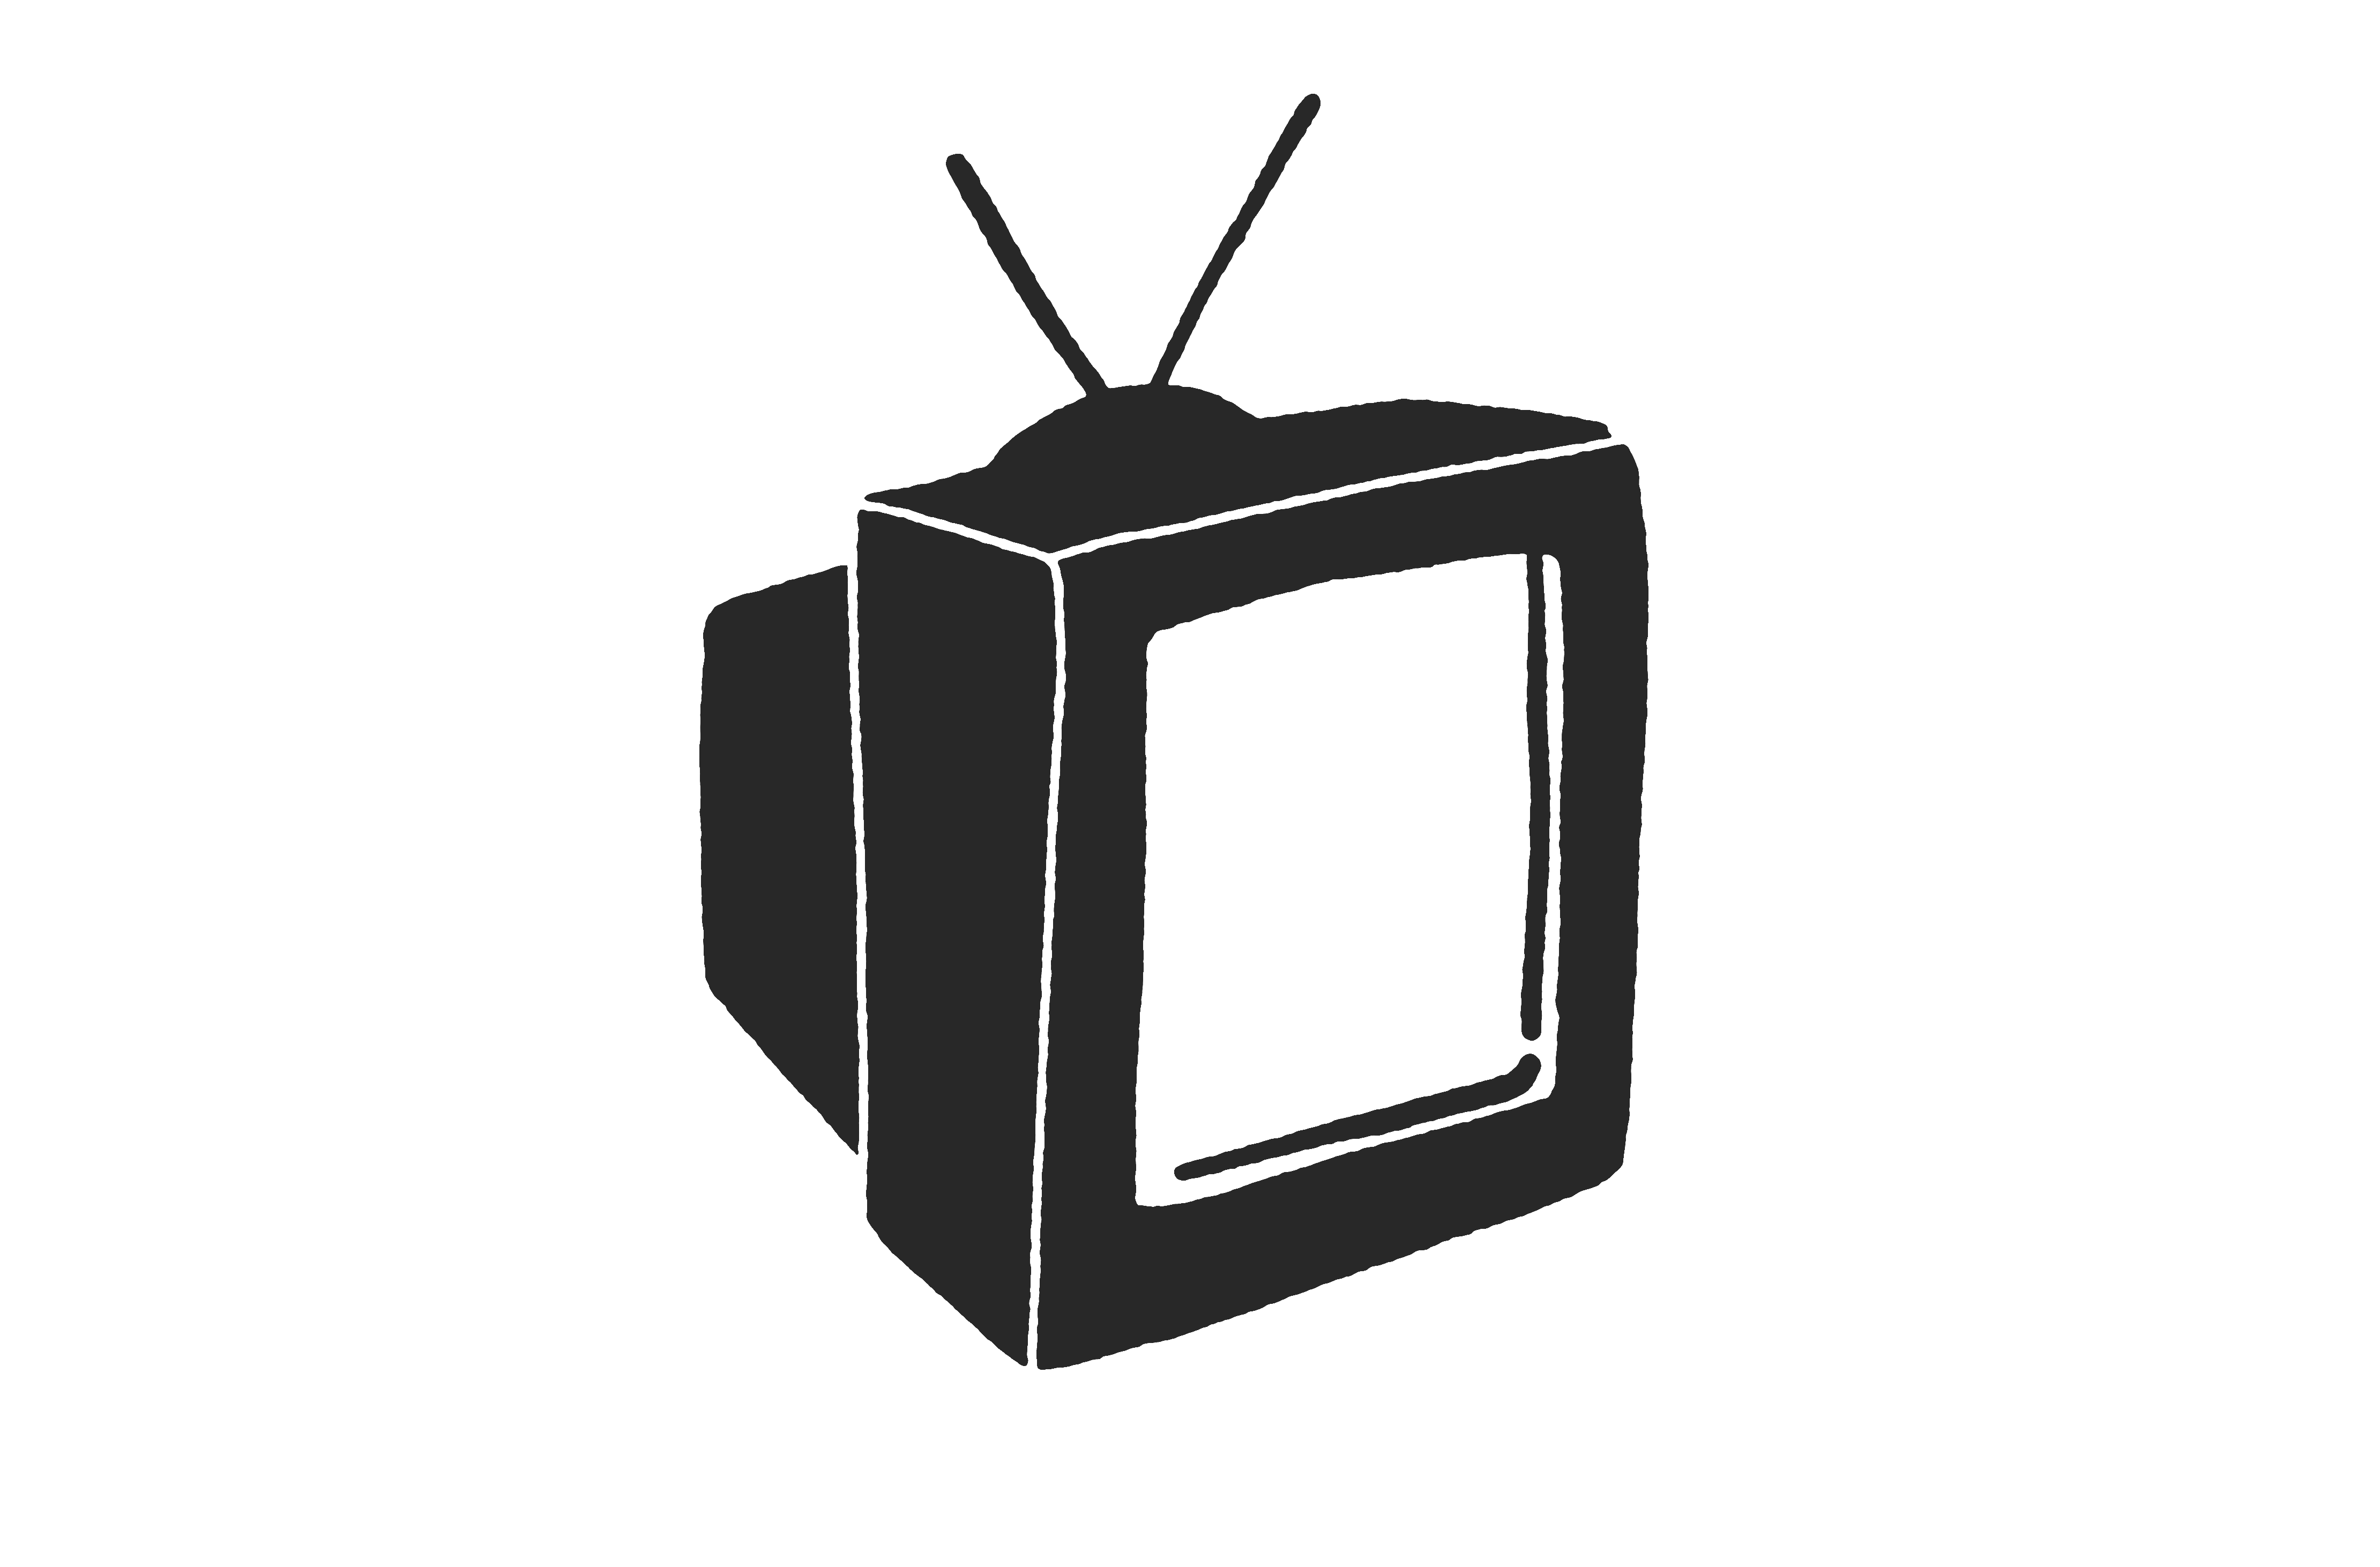 Drawing of television set